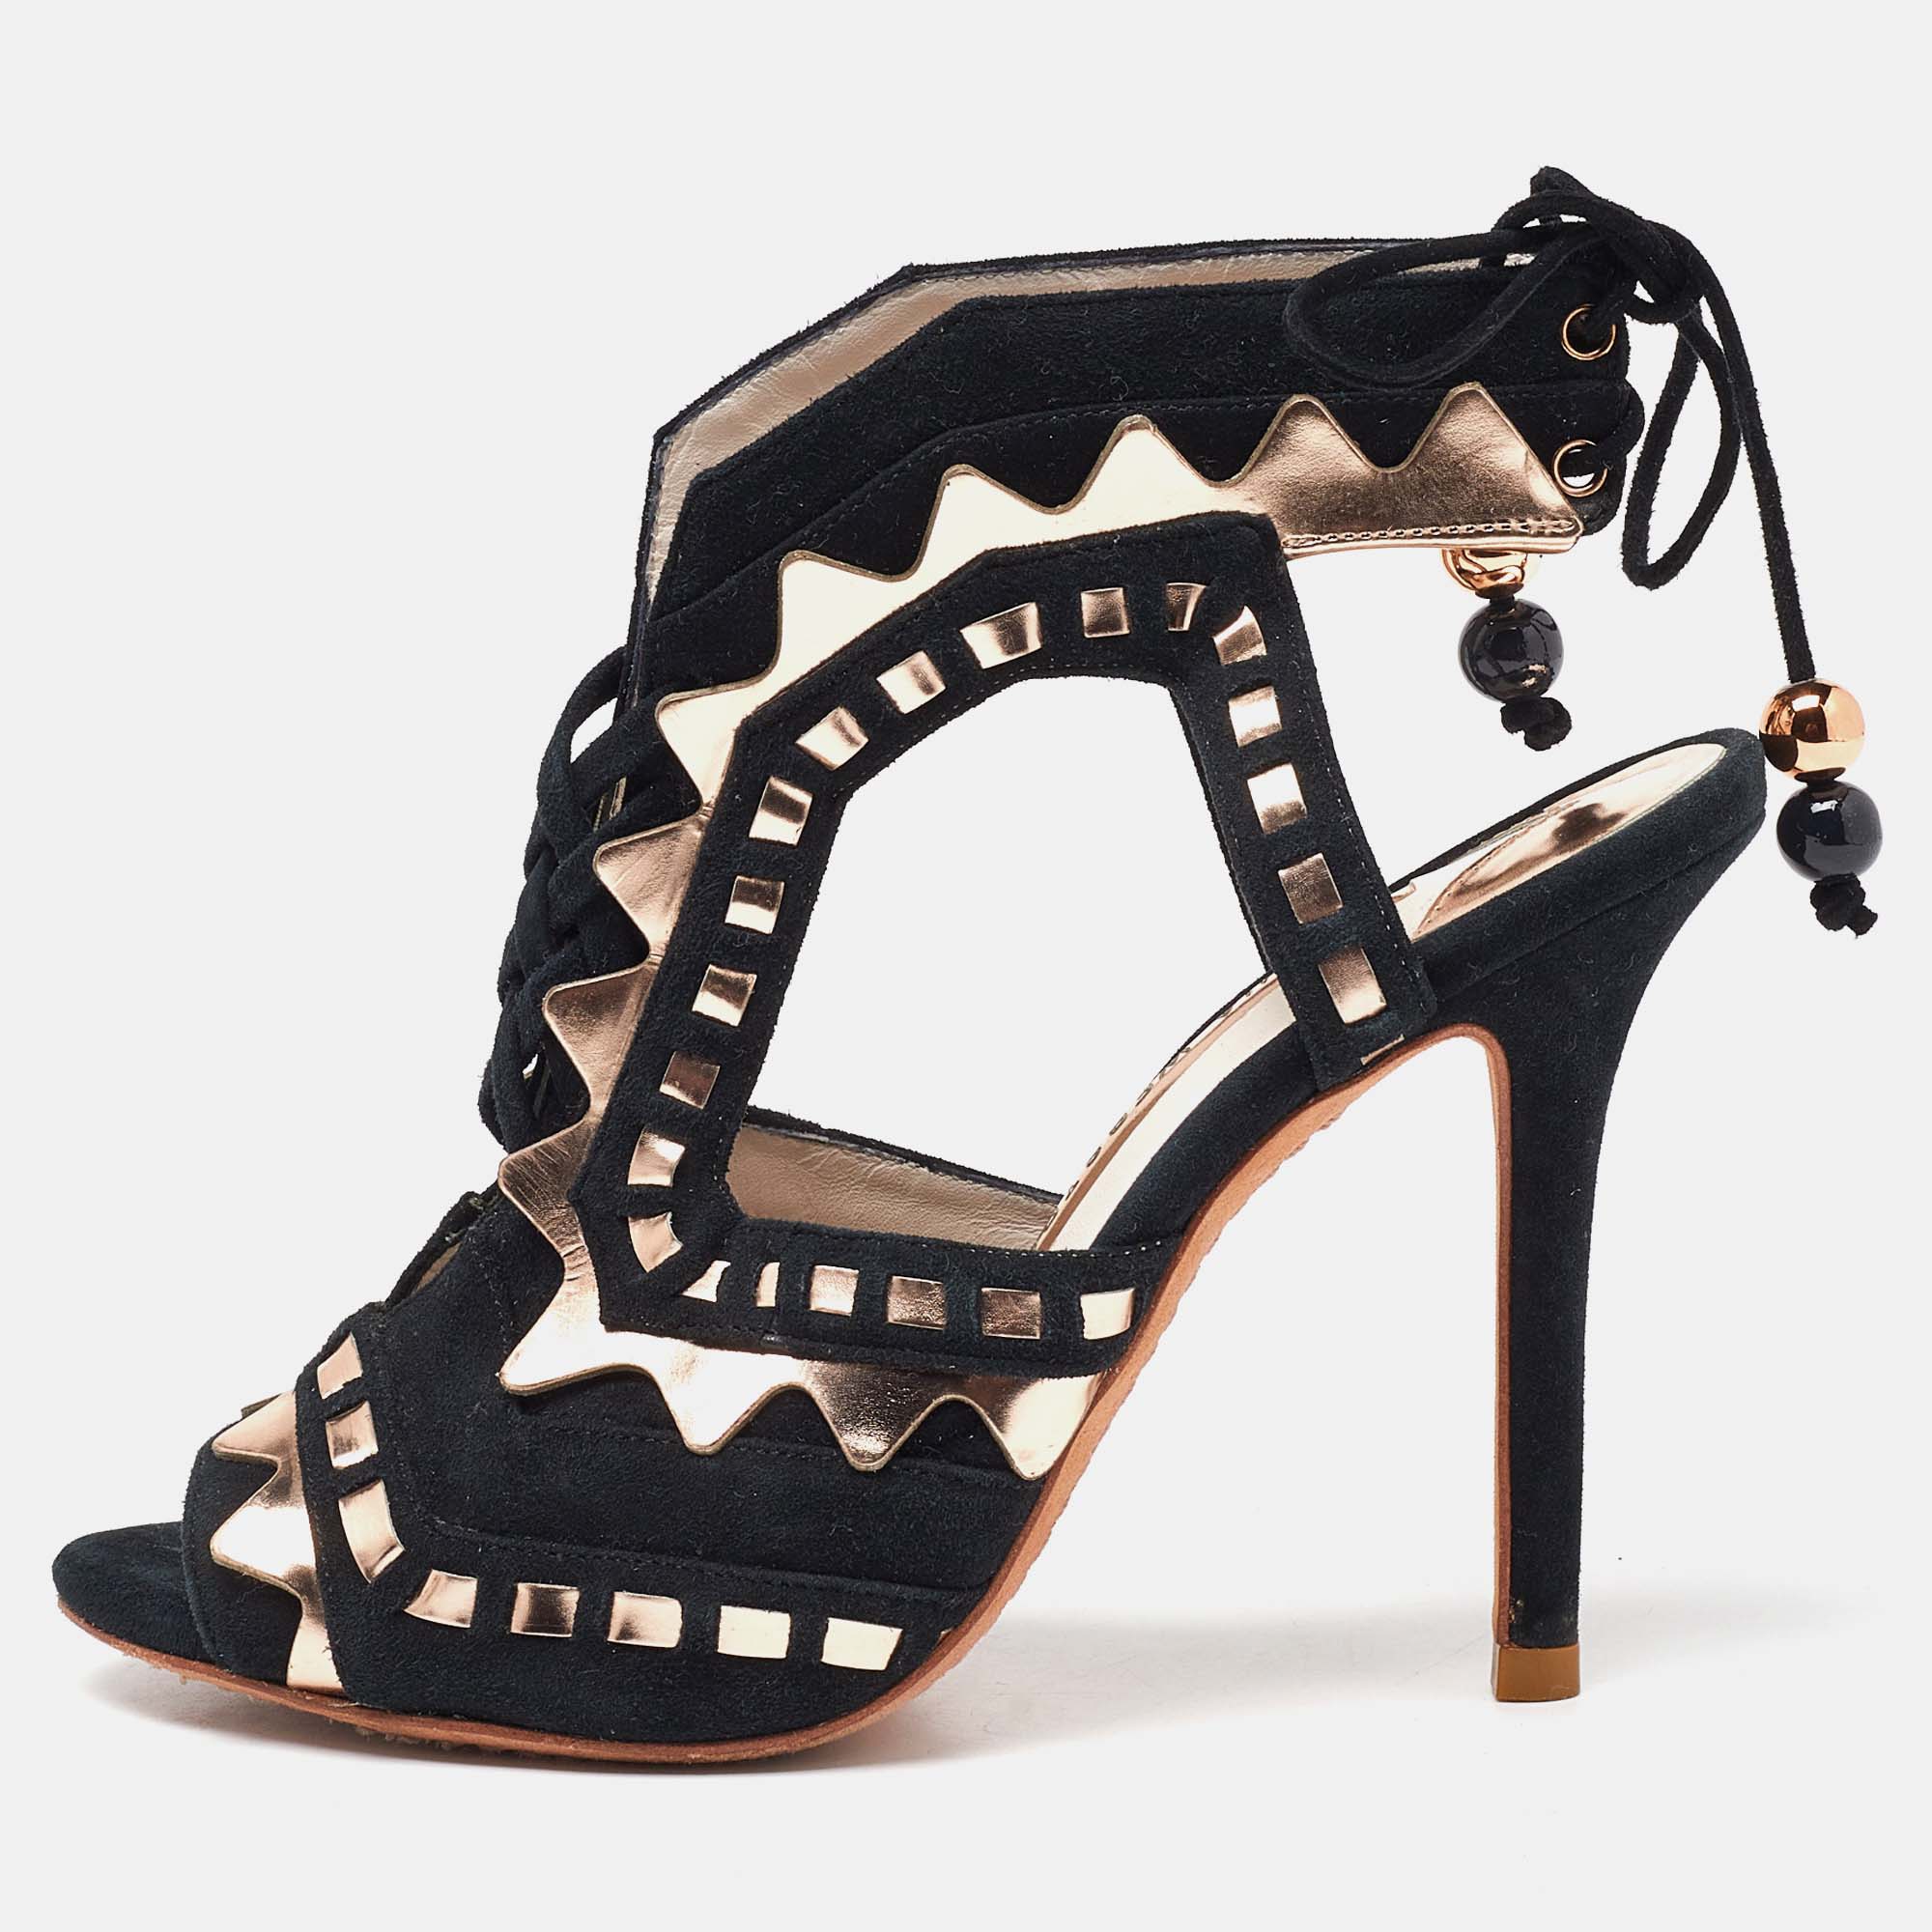 Sophia webster black/metallic suede and leather riko peep toe ankle tie sandals size 36